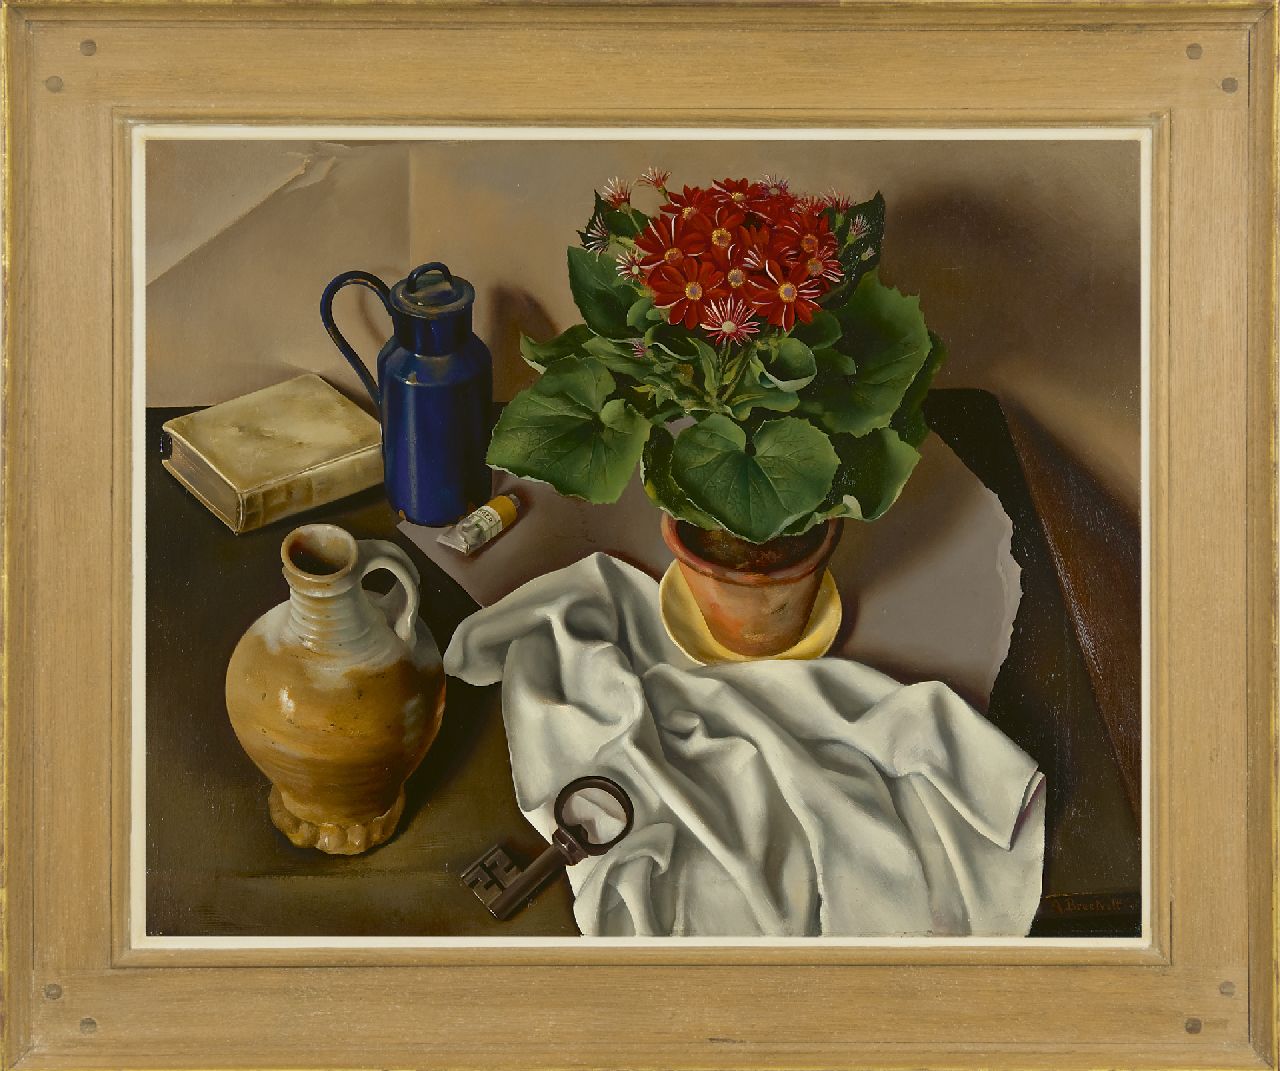 Breetvelt A.  | Adolf 'Dolf' Breetvelt, Stilleven met plantje, kruik en sleutel, olieverf op doek 60,4 x 75,1 cm, gesigneerd rechtsonder en gedateerd '22 (vorm sleutel)